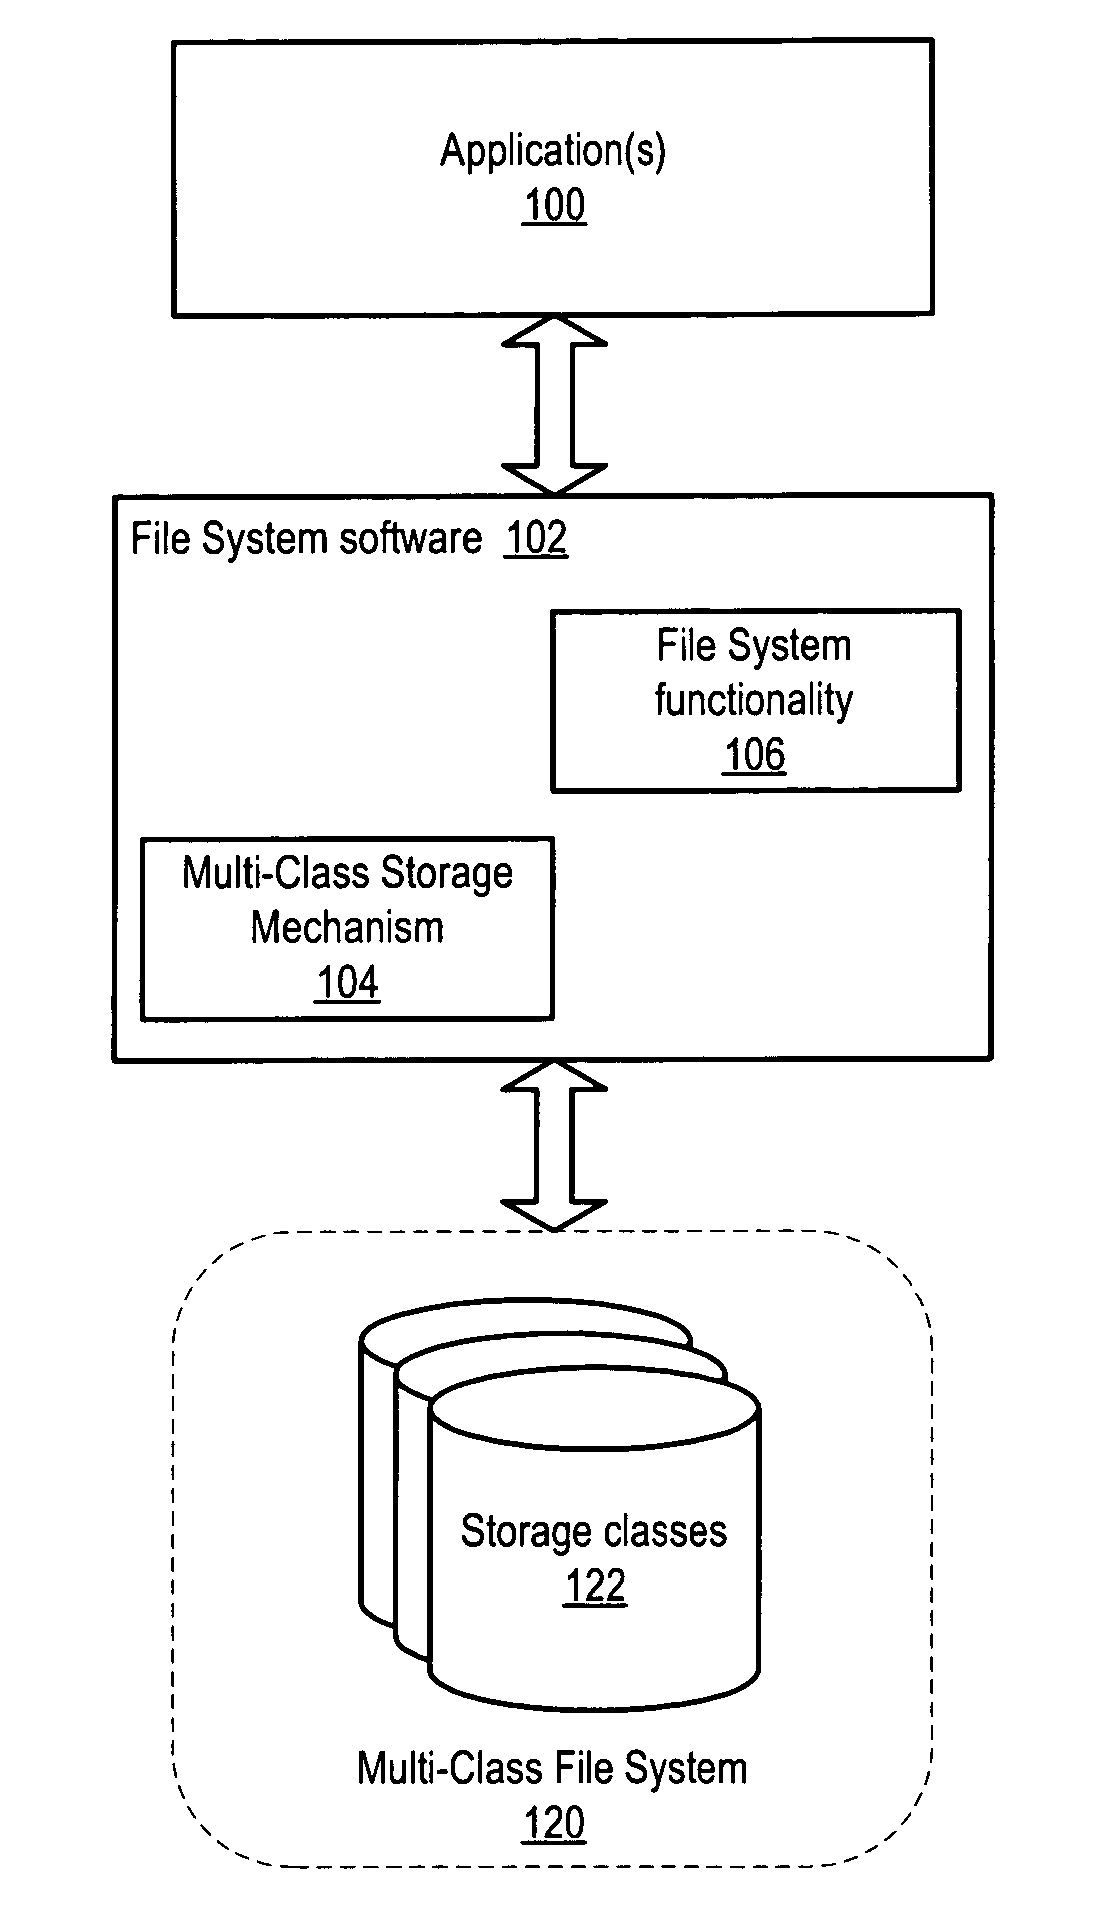 Multi-class storage mechanism